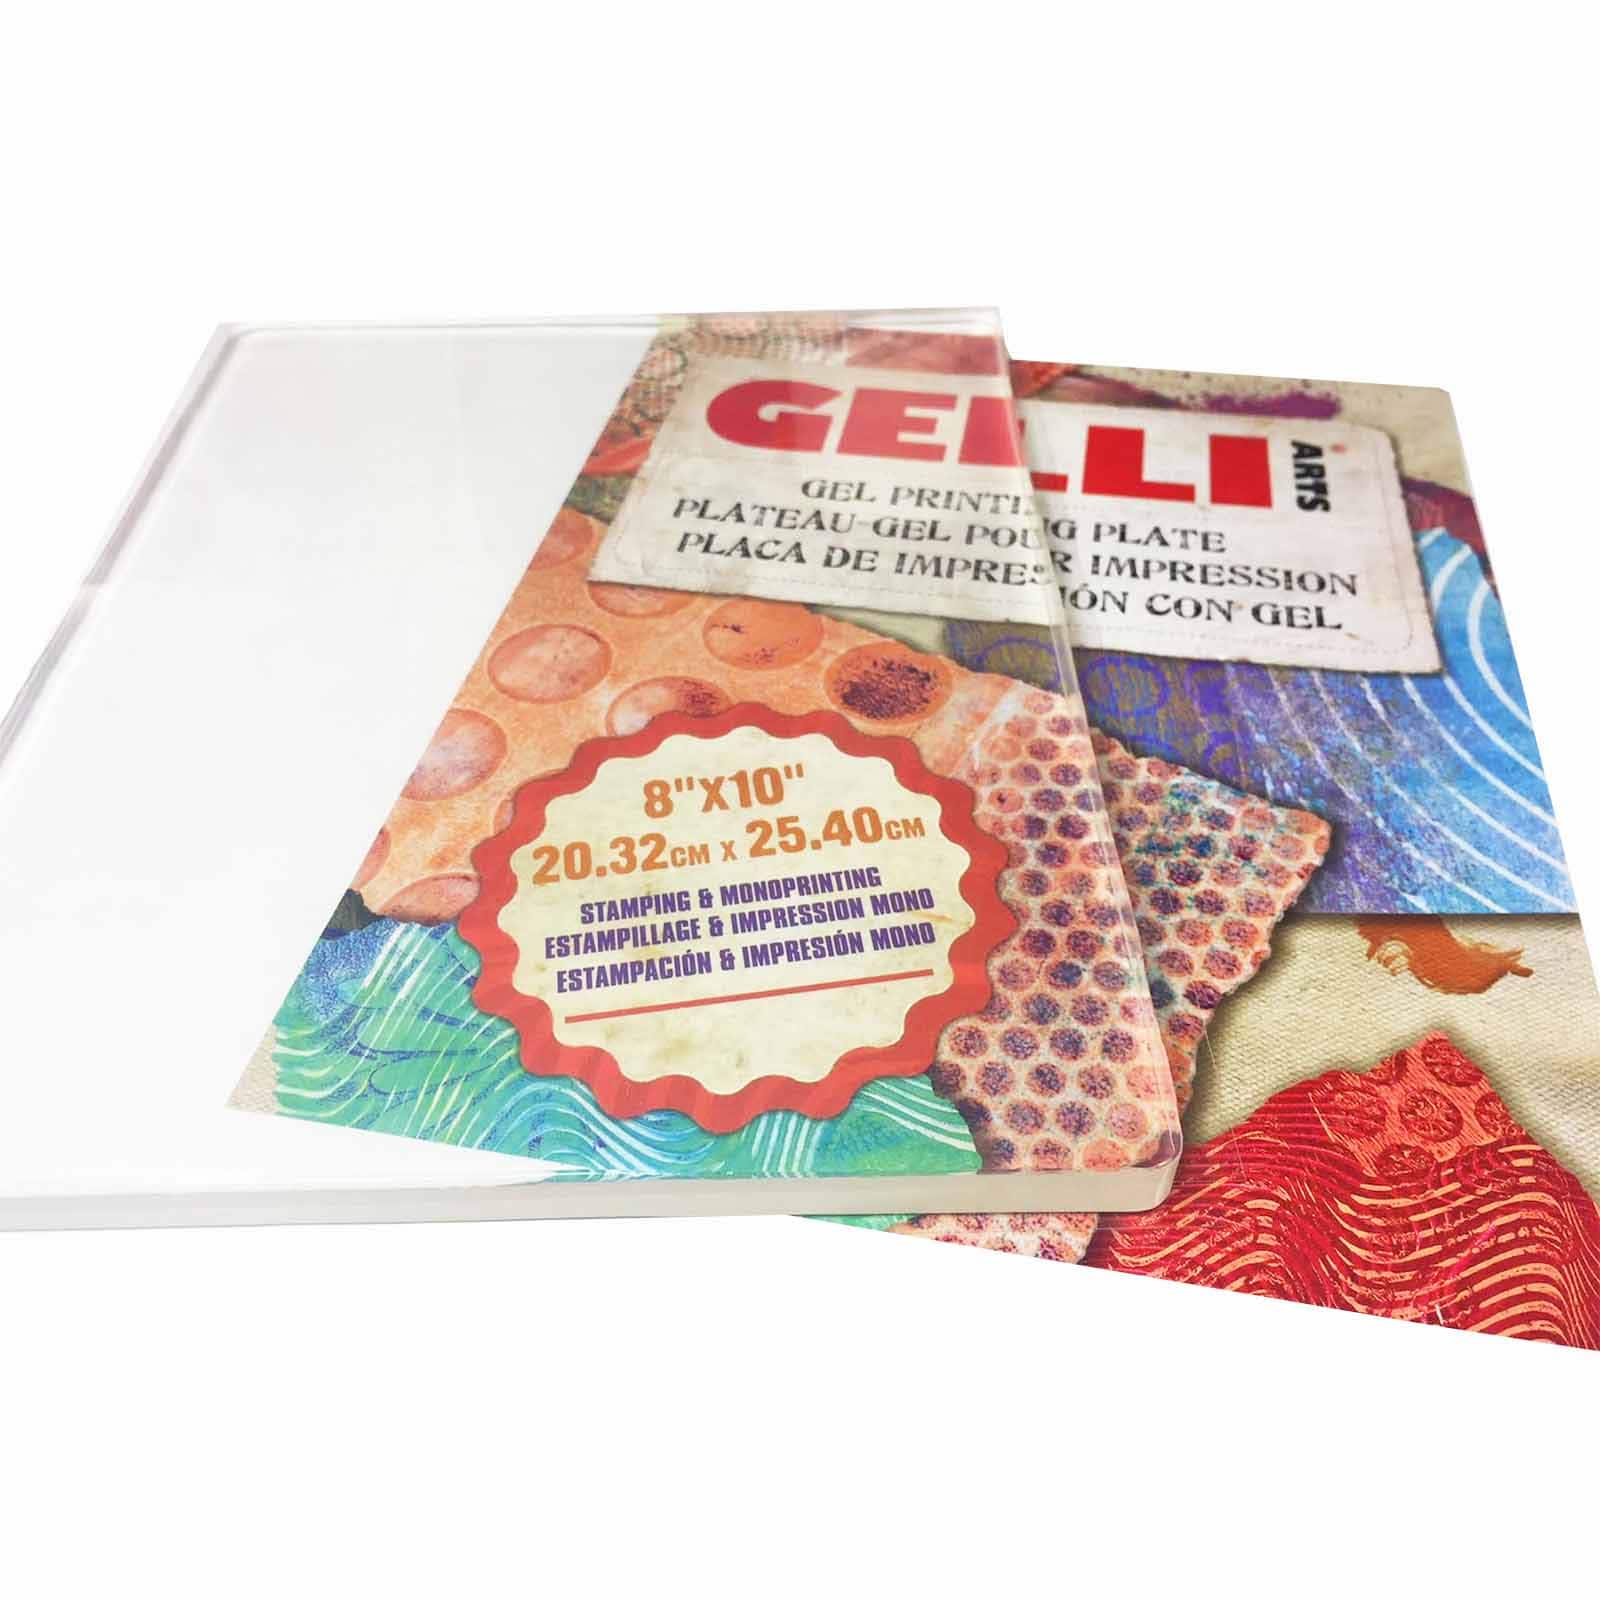 Gelli Arts Student Printing Plates - 8 x 10, Rectangle, Class